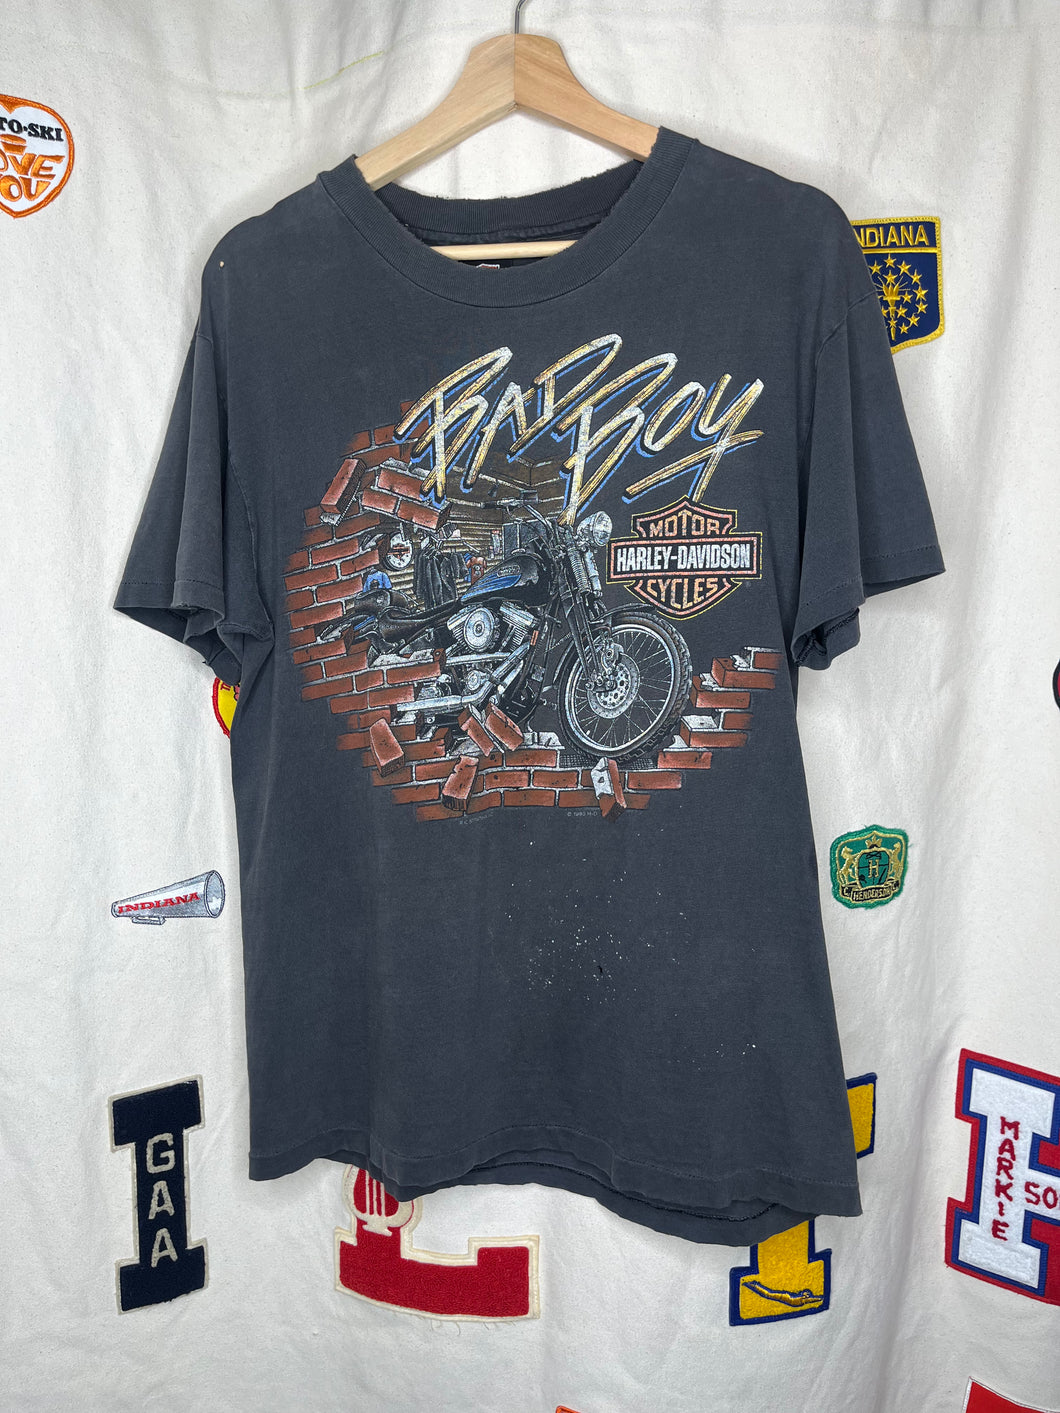 Vintage Harley Davidson Bad Boy 1995 Faded Distressed Black T-Shirt: Medium